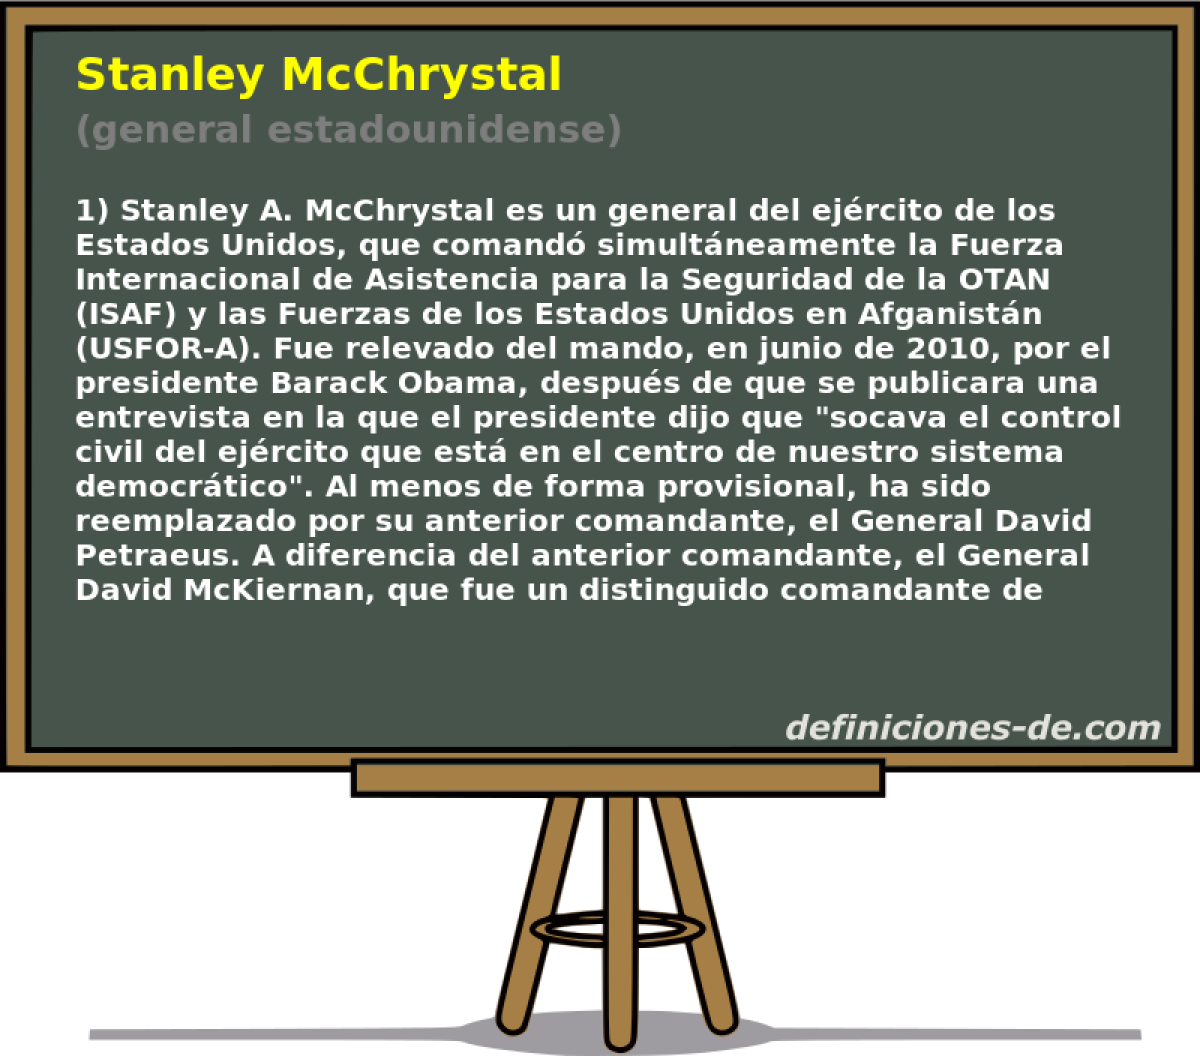 Stanley McChrystal (general estadounidense)